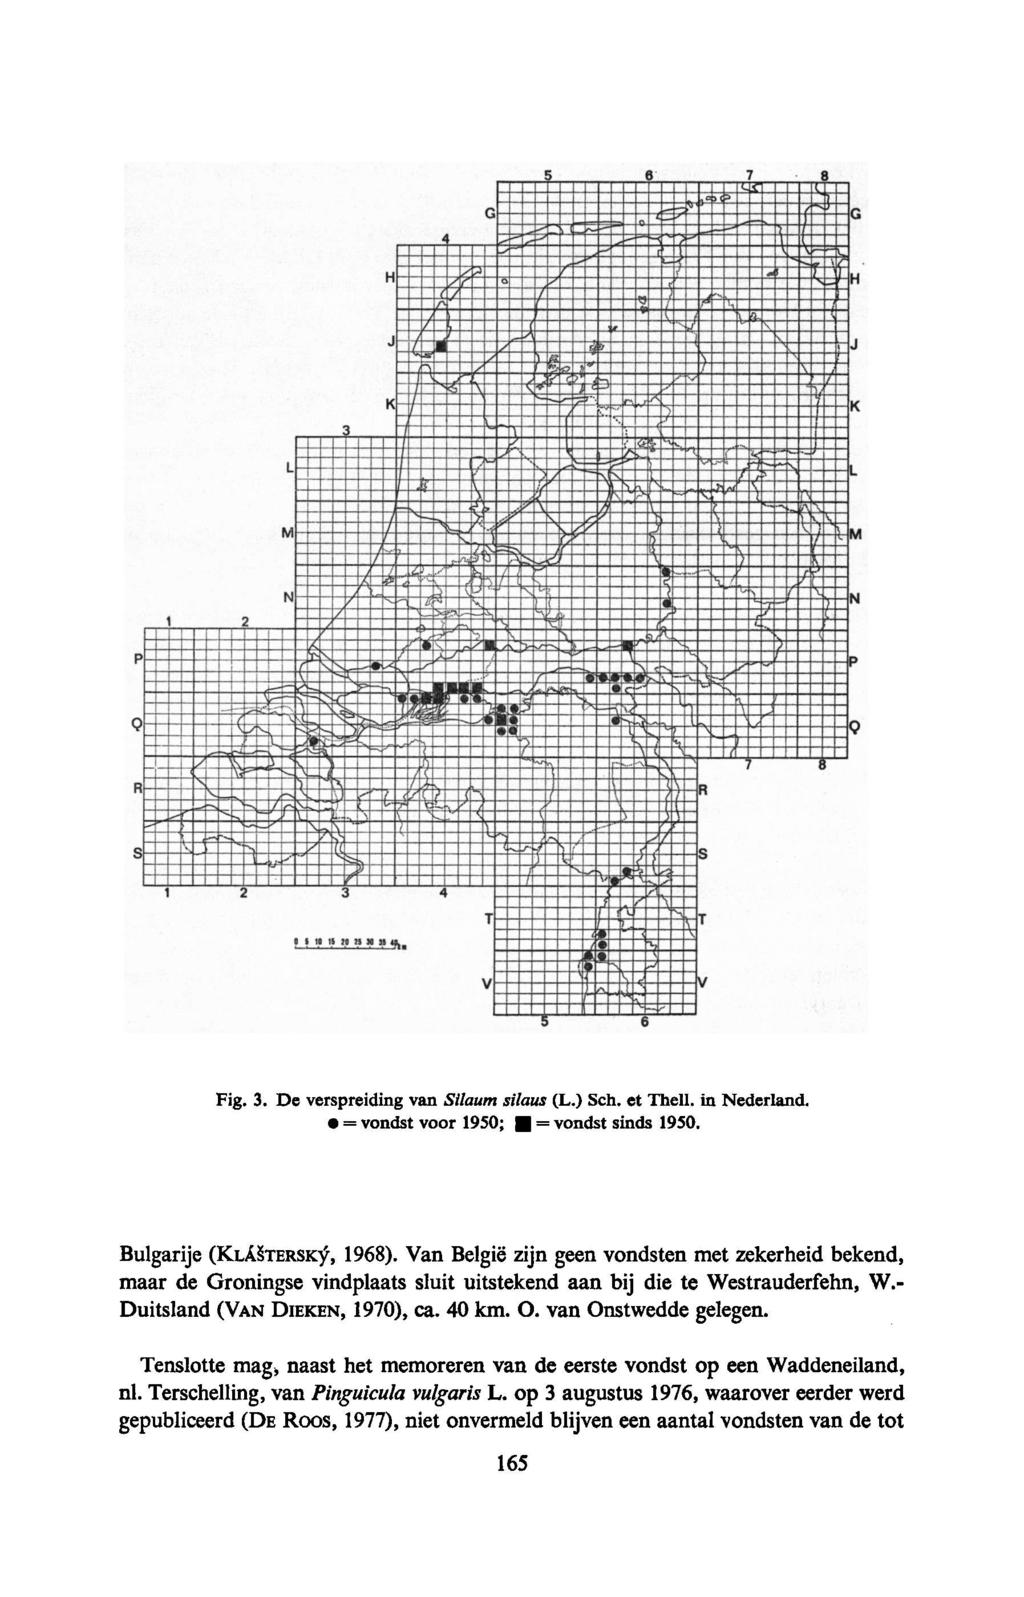 Fig. 3. De verspreiding van Silaum silaus (L.) Sch. et Thell. in Nederland. vondst = voor = 1950; vondst sinds 1950. Bulgarije (KLASTERSKY, 1968).